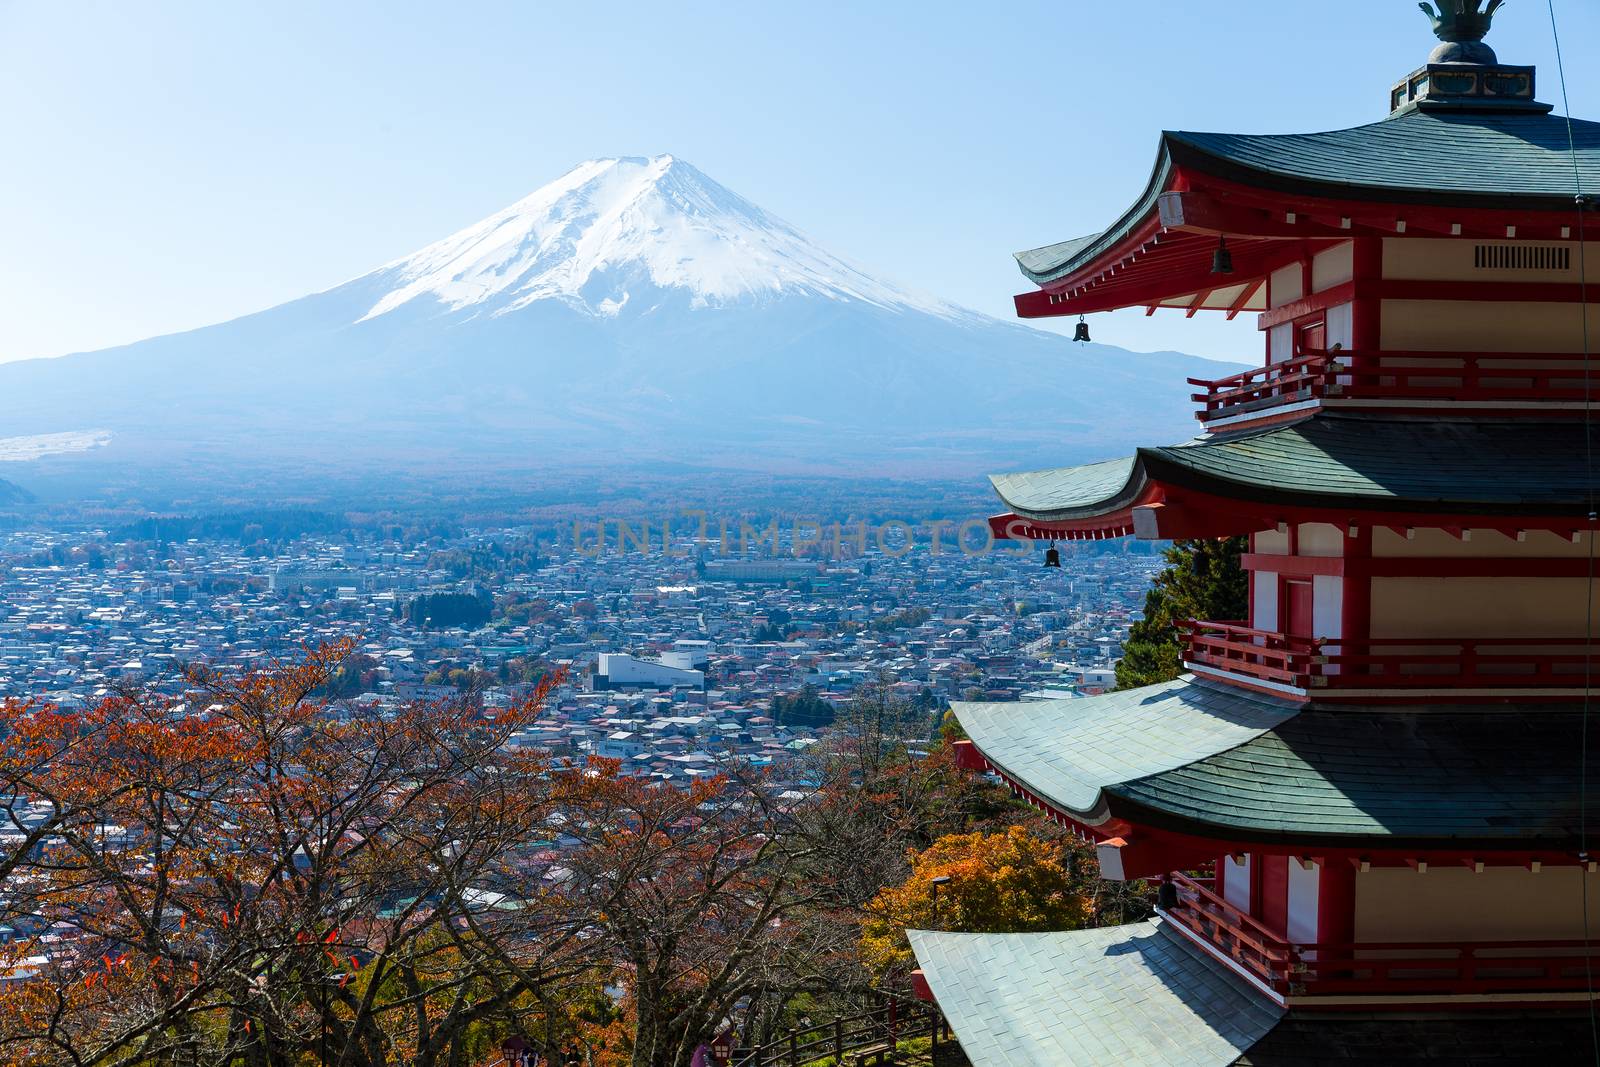 Mt. Fuji with Chureito Pagoda